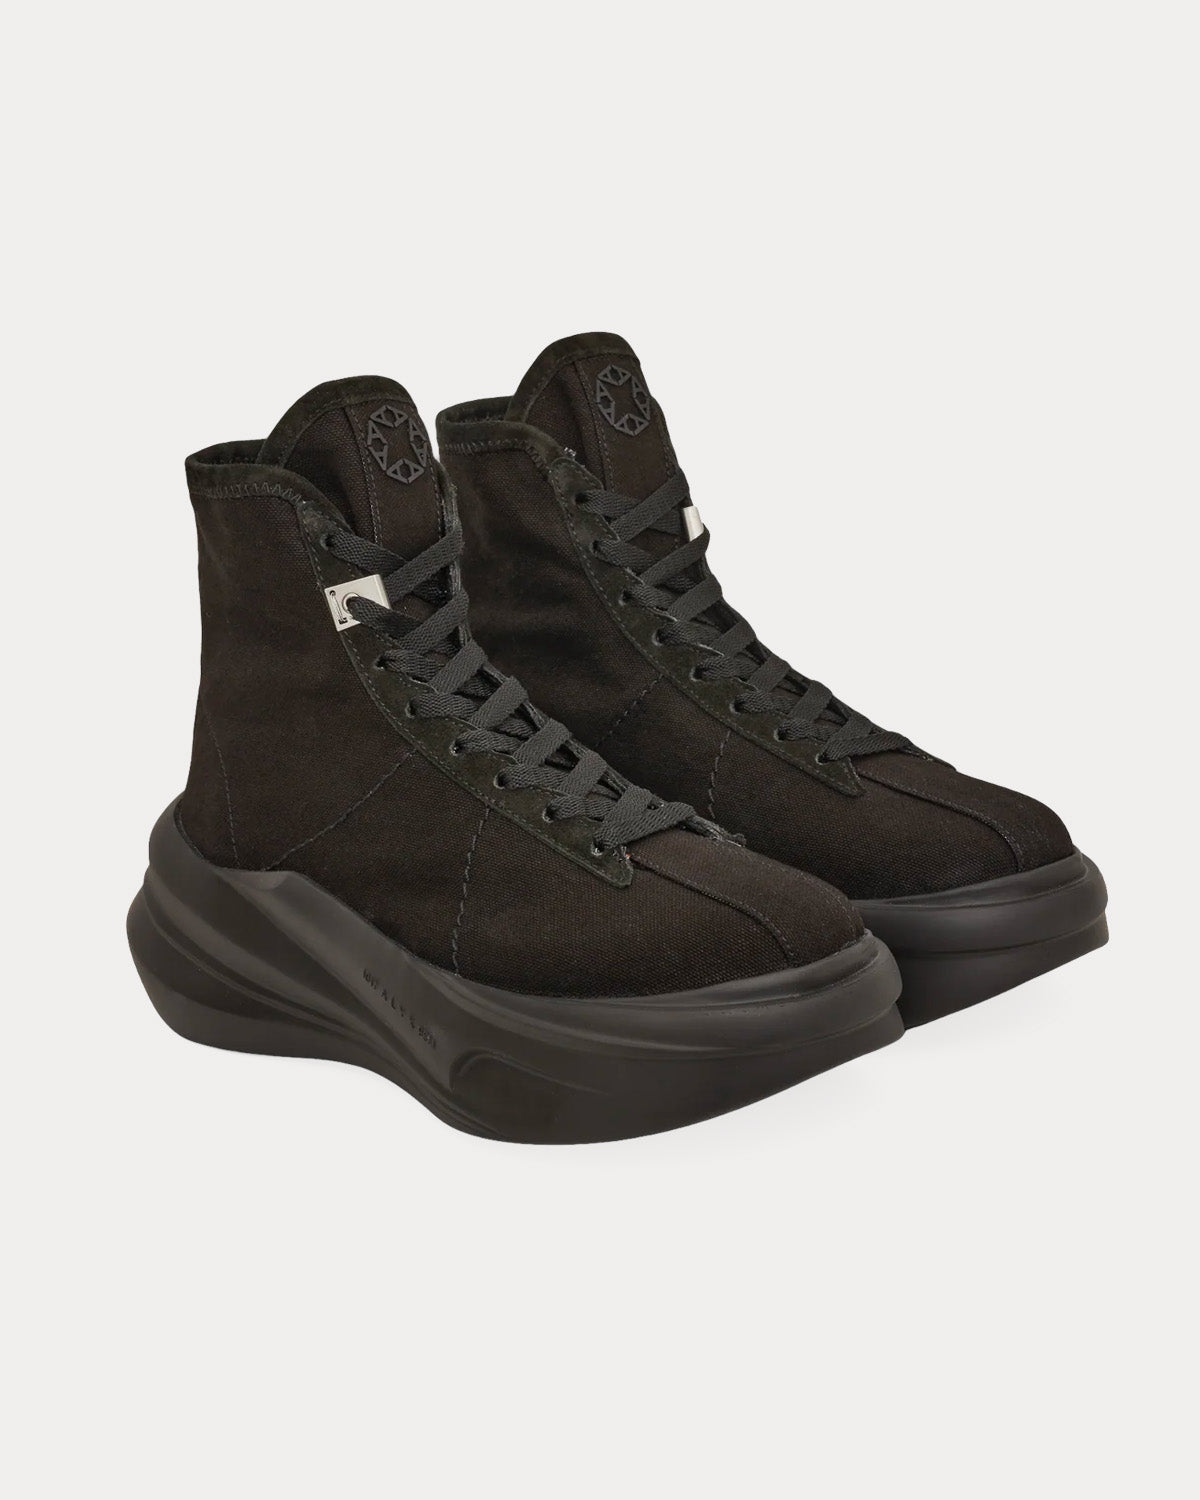 1017 ALYX 9SM - Aria Canvas Black High Top Sneakers